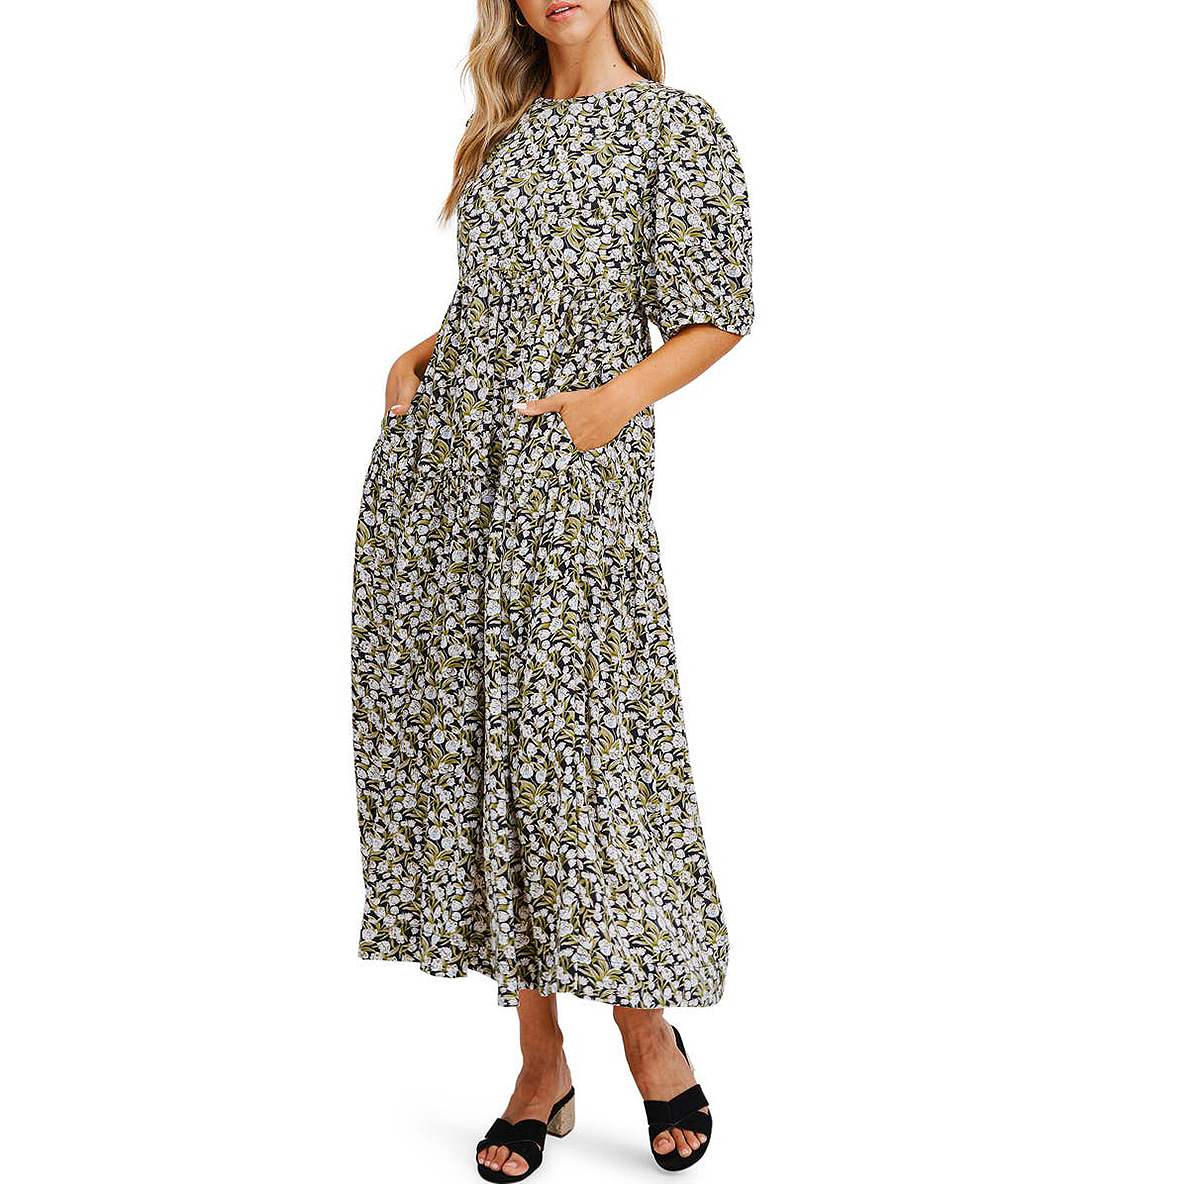 Nordstrom Spring Dresses: Our 11 Picks Starting at $21